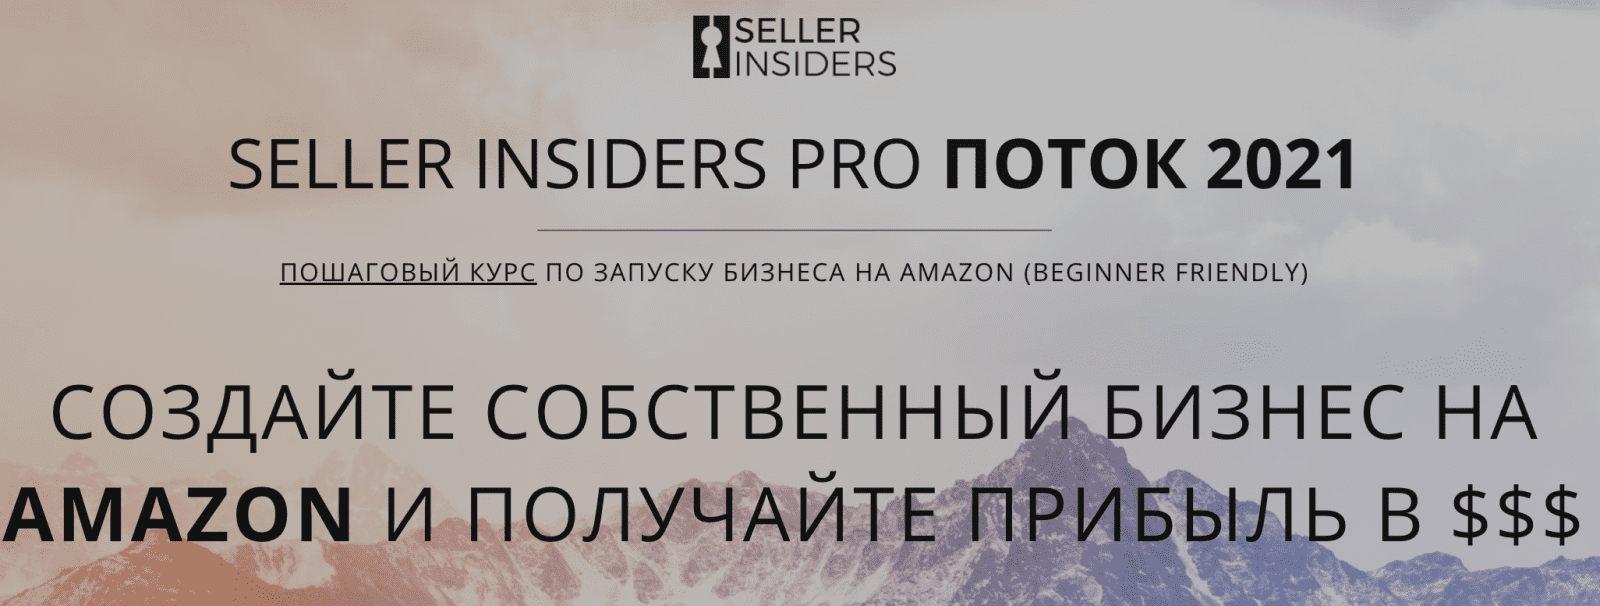 [Seller Insiders] Joseph Cash, Андрей Головнев - Пошаговый курс по запуску бизнеса на Amazon (2021)